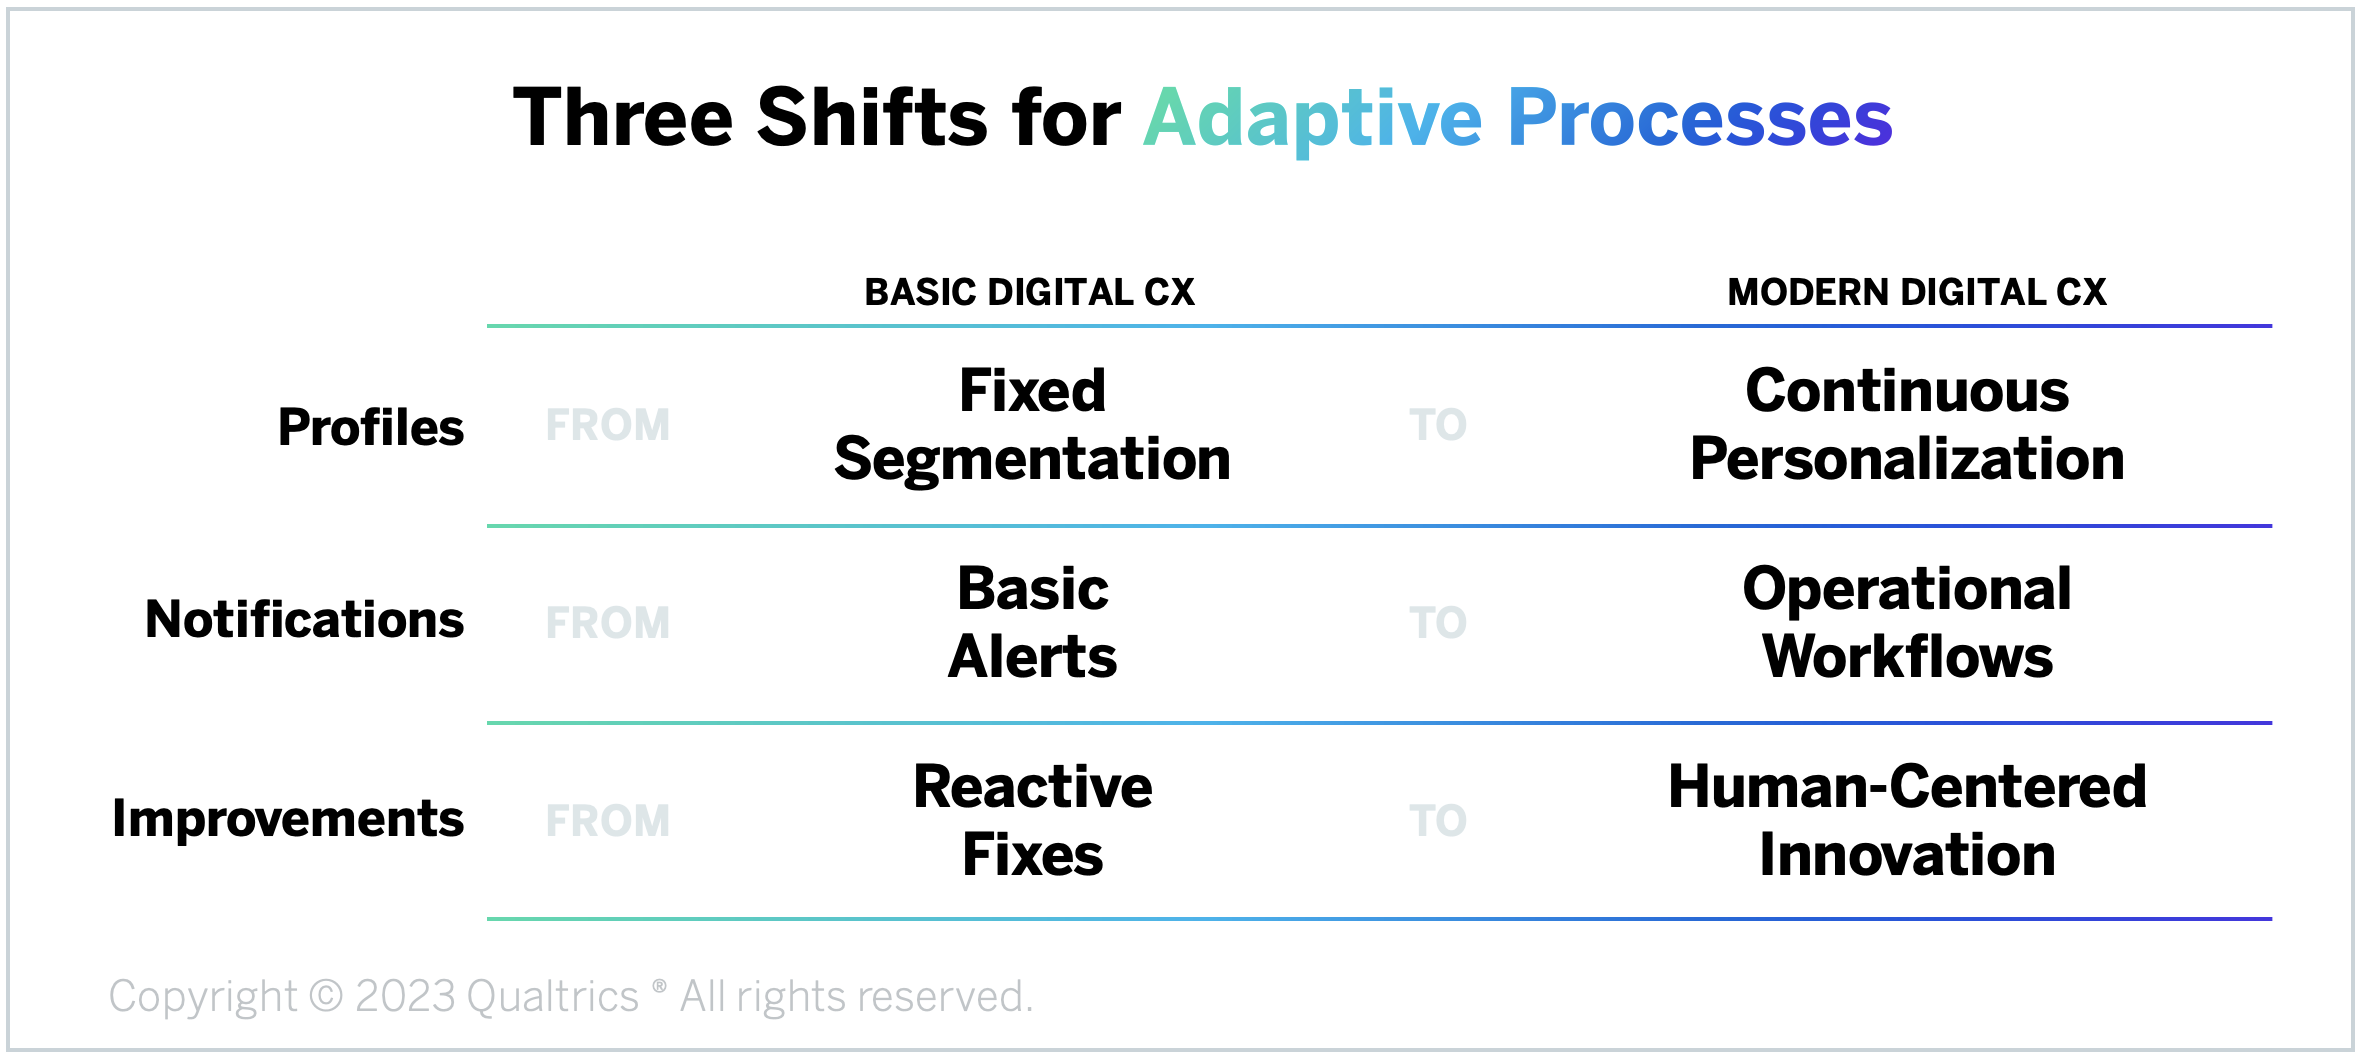 Modern Digital CX Program -- Adaptive Processes 2